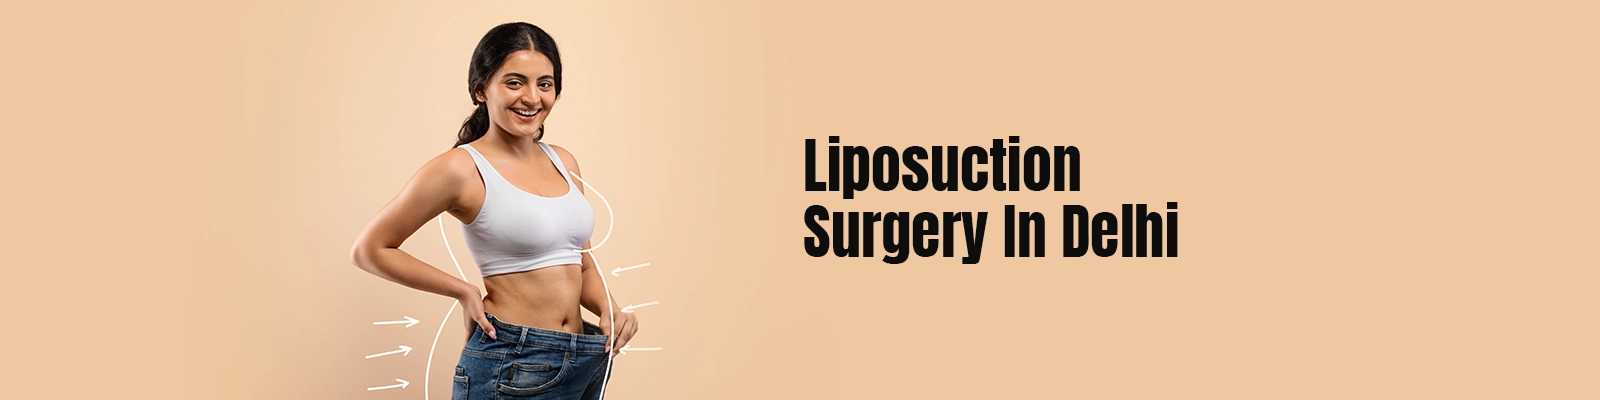 Liposuction Surgery In Delhi